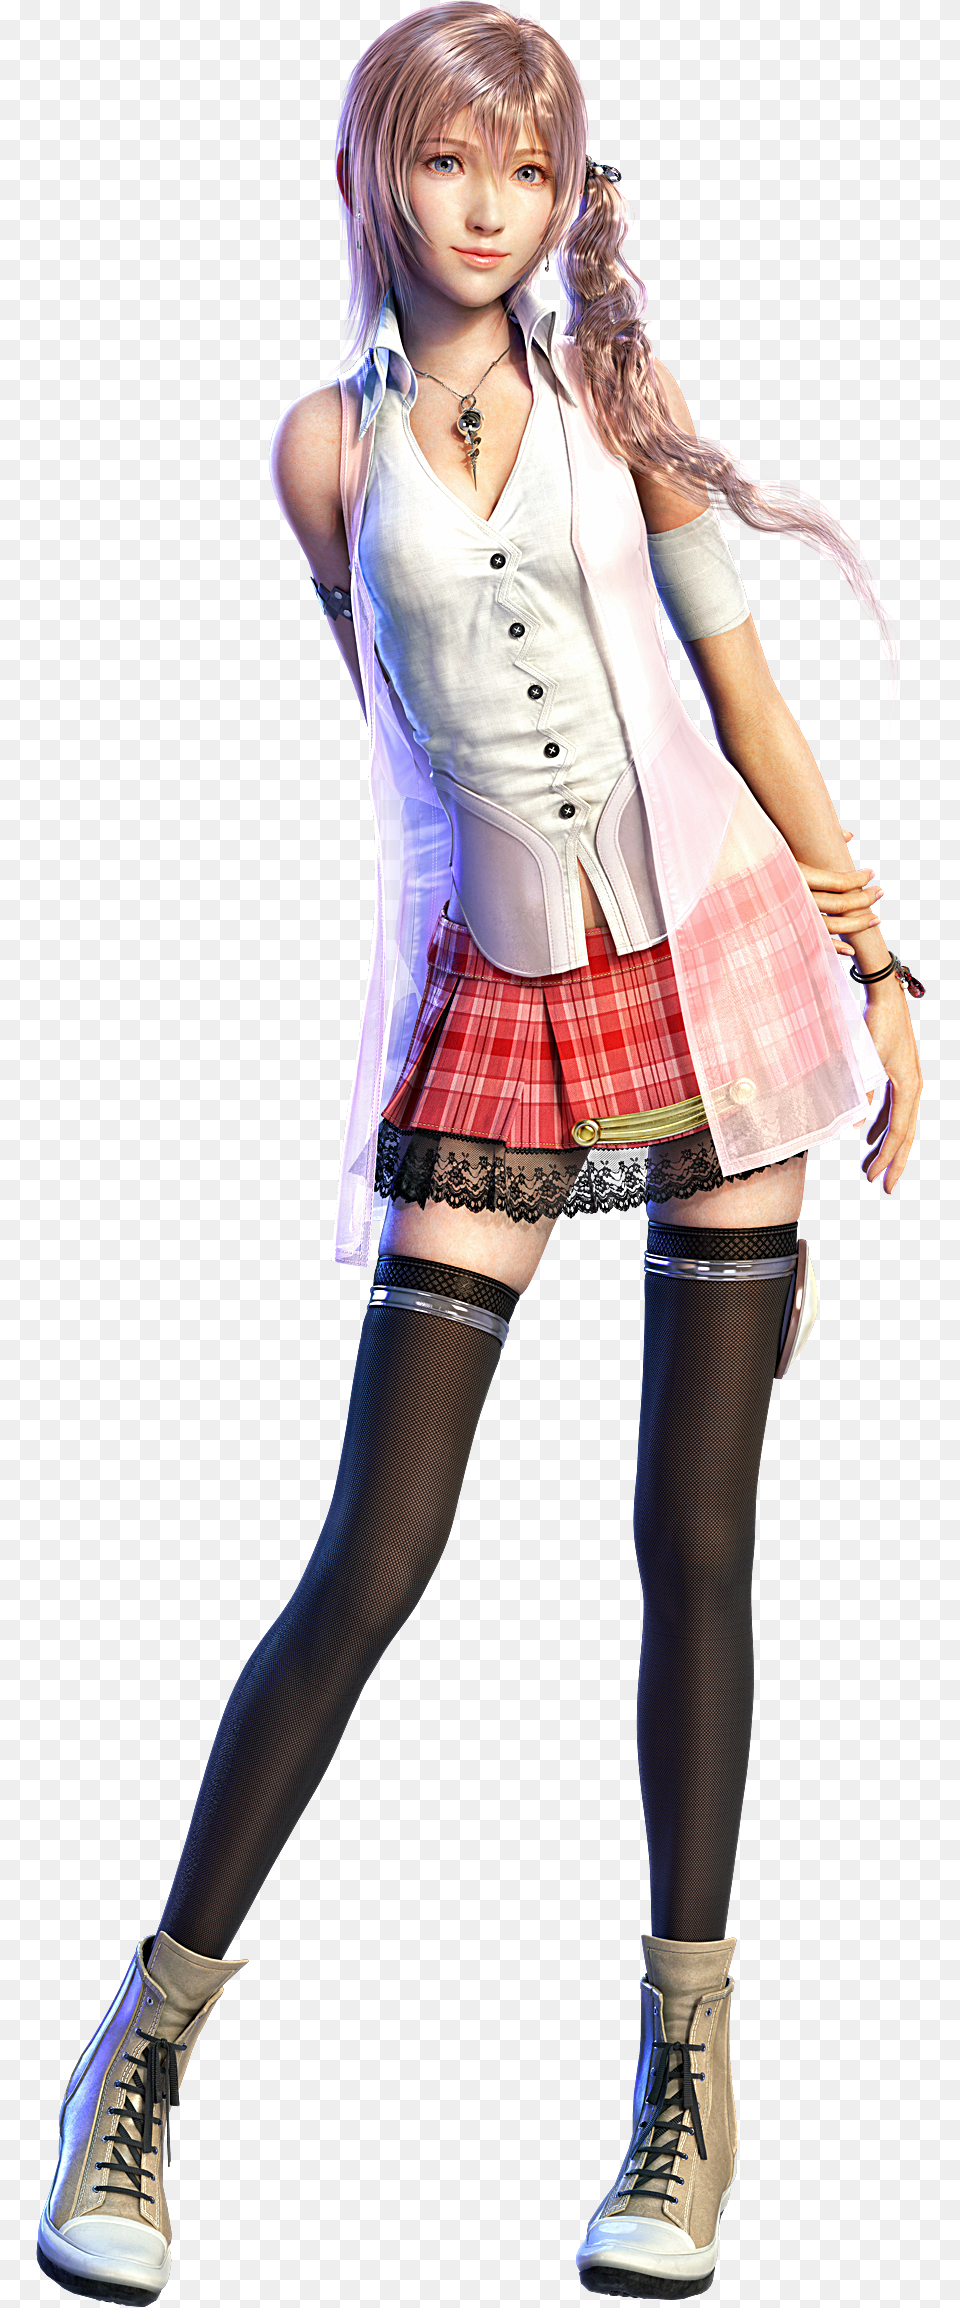 Serah Farron Final Fantasy Xiii Character, Clothing, Shoe, Footwear, Skirt Png